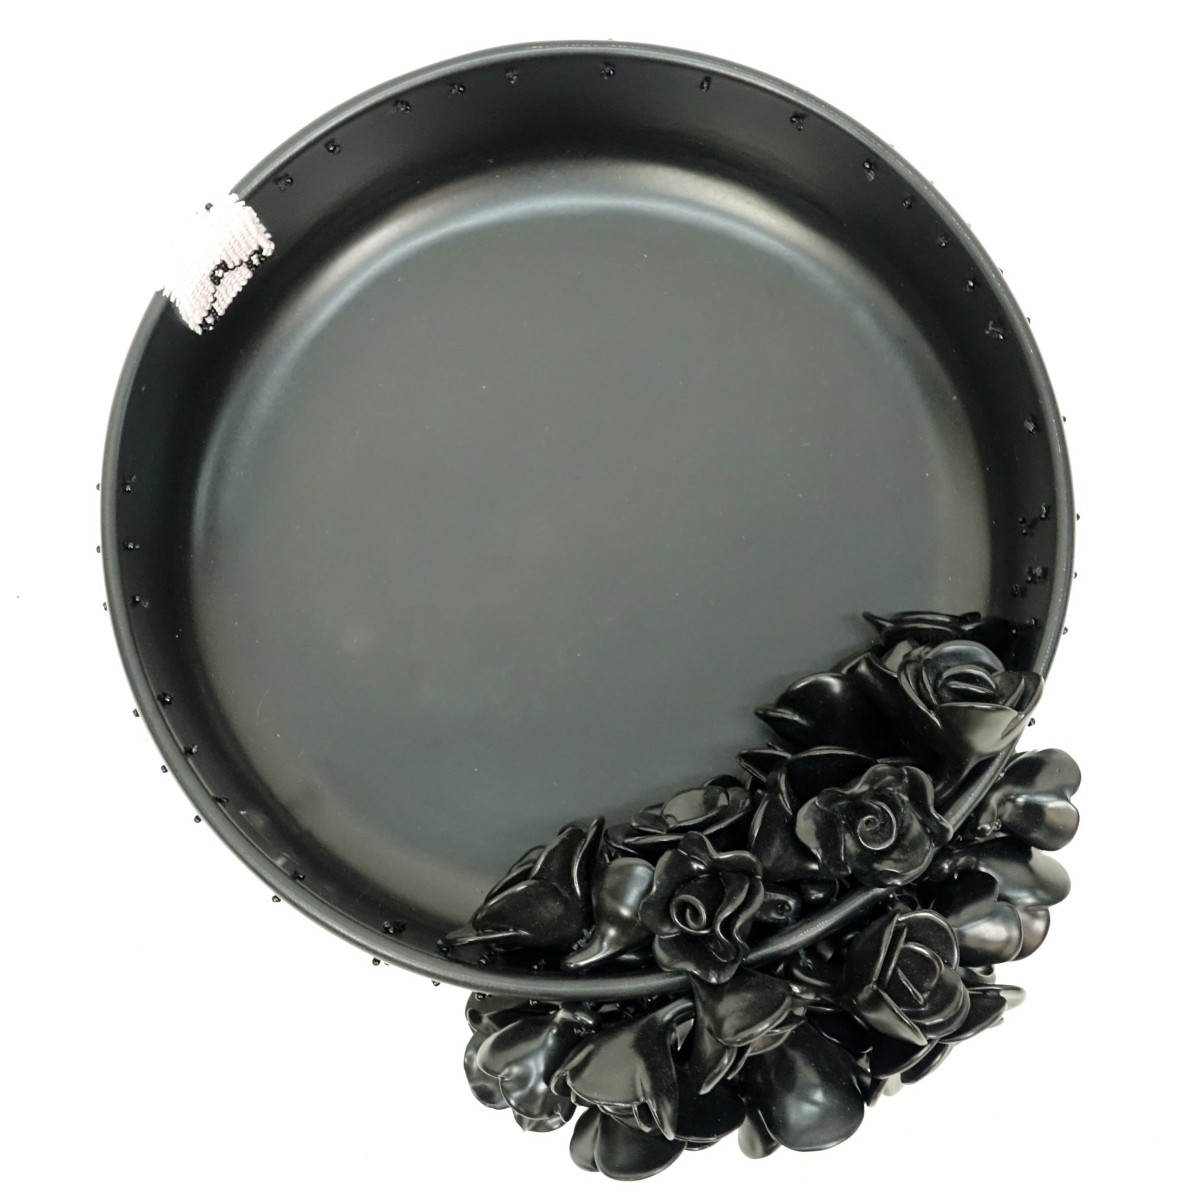 Artnenica Black Ceramic Bowl